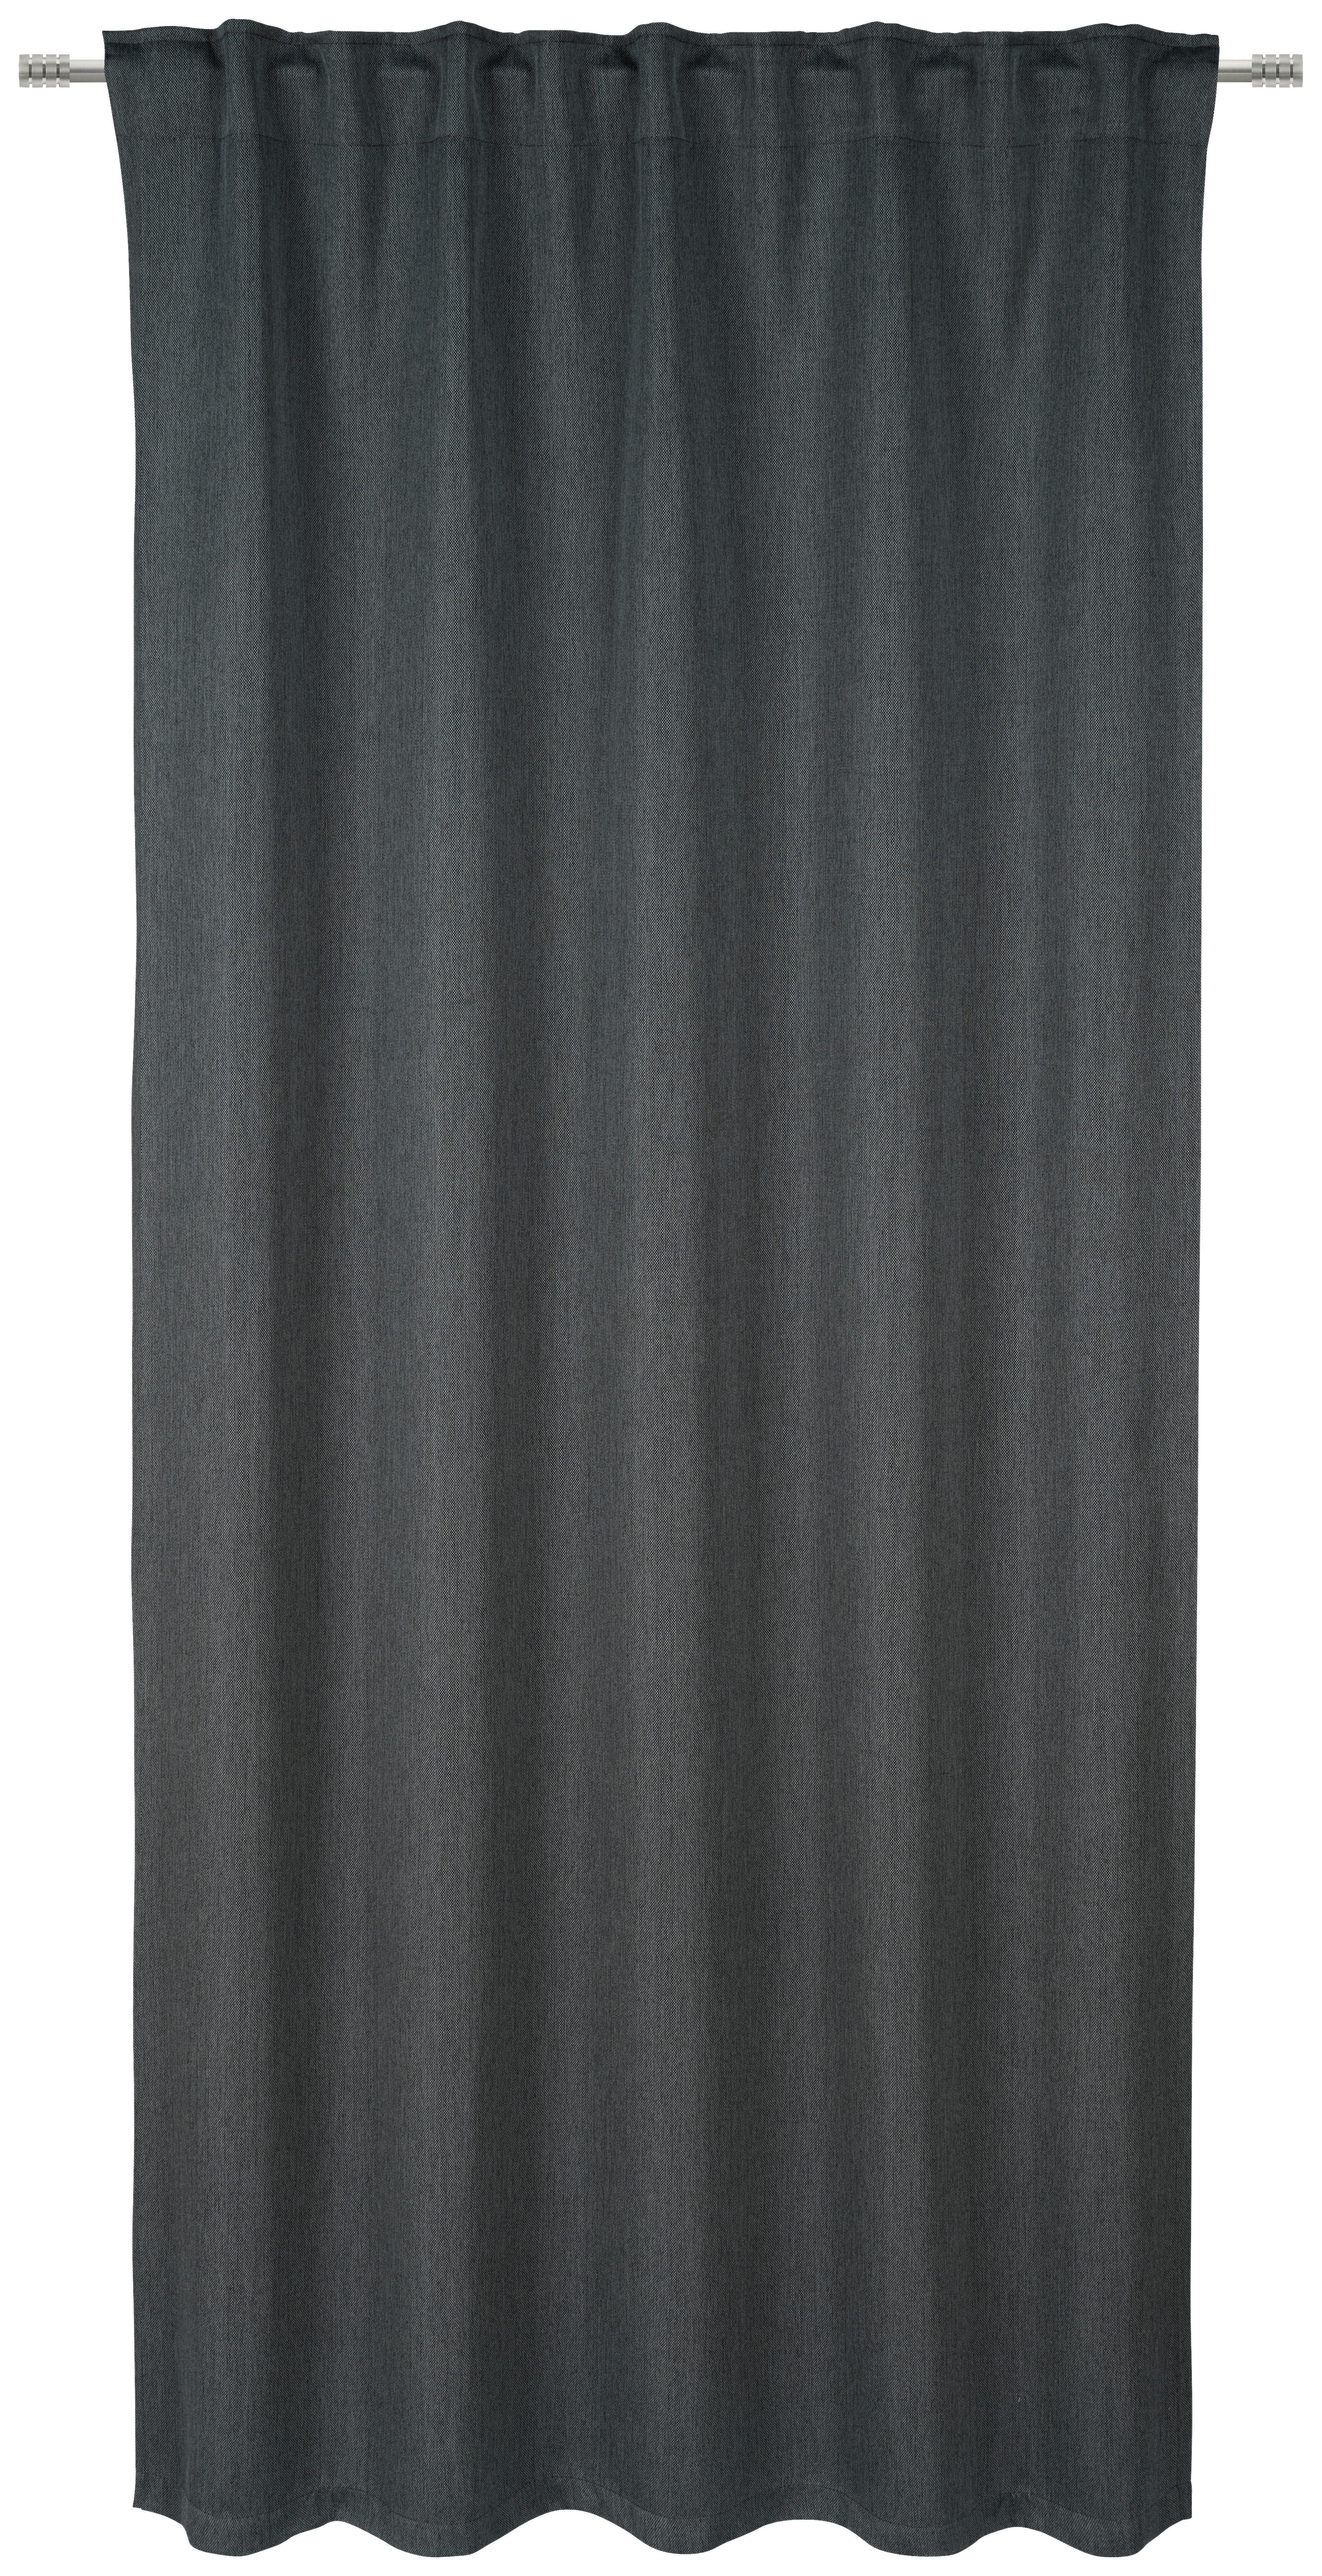 WÄRMESCHUTZVORHANG  Verdunkelung  140/245 cm   - Jadegrün/Anthrazit, Basics, Textil (140/245cm) - Esposa